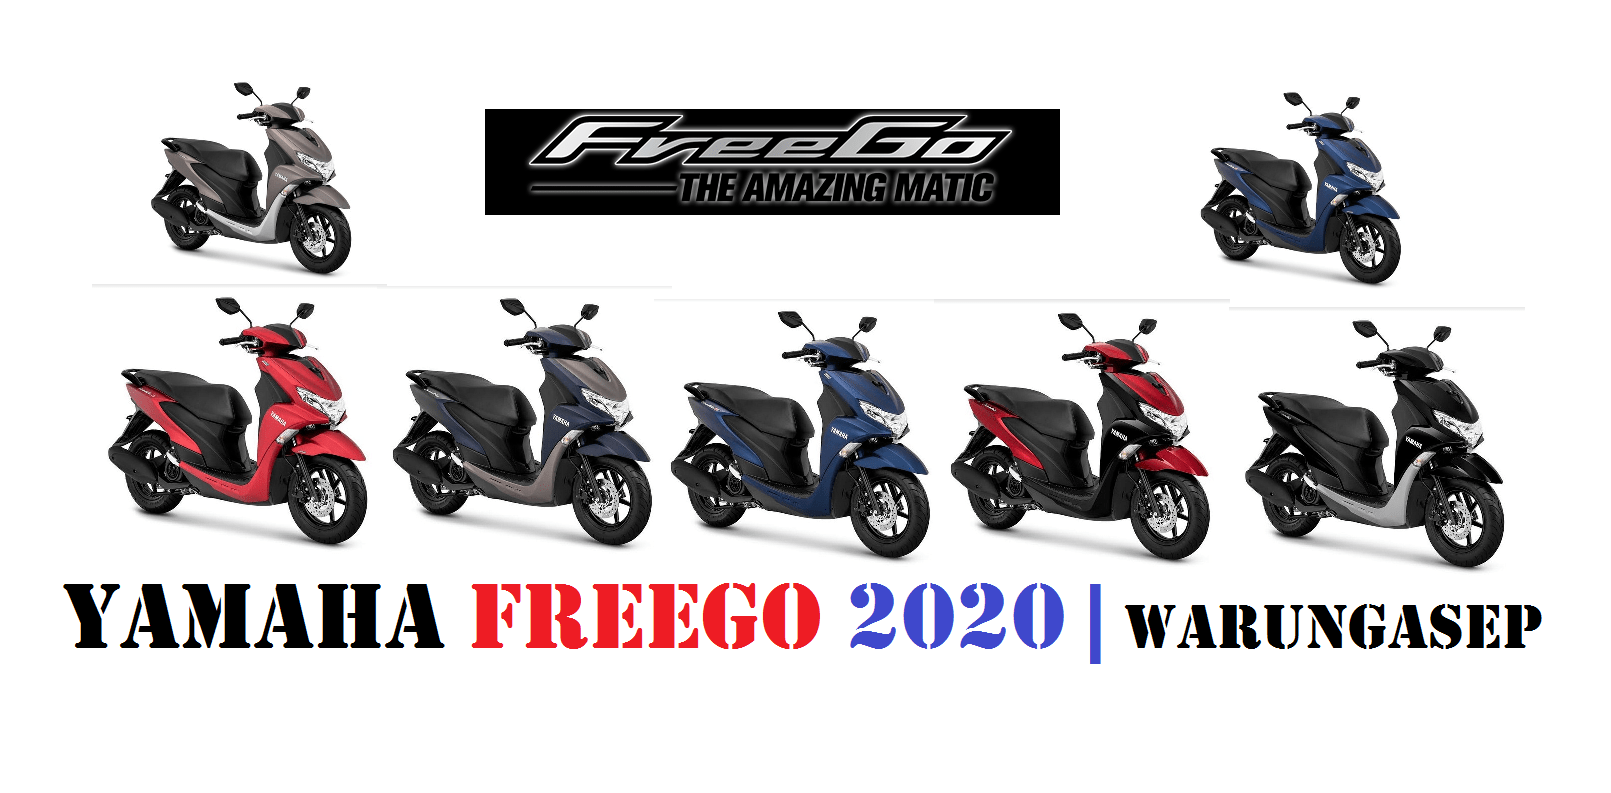 Harga Yamaha Freego Tipe Standar. 7 Warna Baru Yamaha FreeGo 2020, Harga Termurah Masih